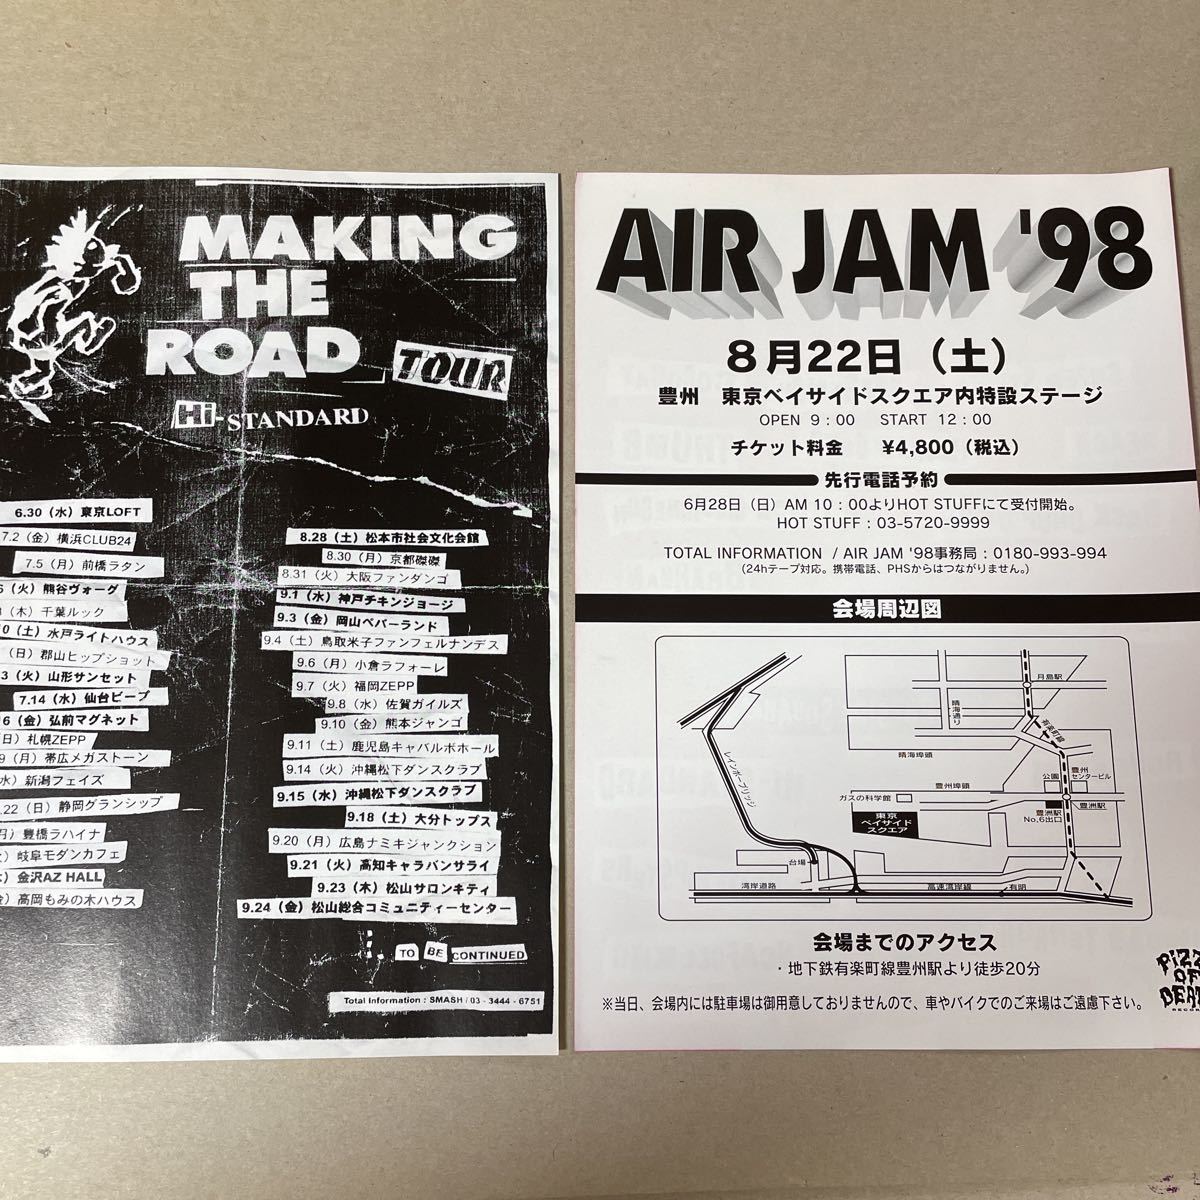  is chair ta air jam 98 leaflet Flyer Hi-STANDARD Air JAM 98 MAKING THE ROAD